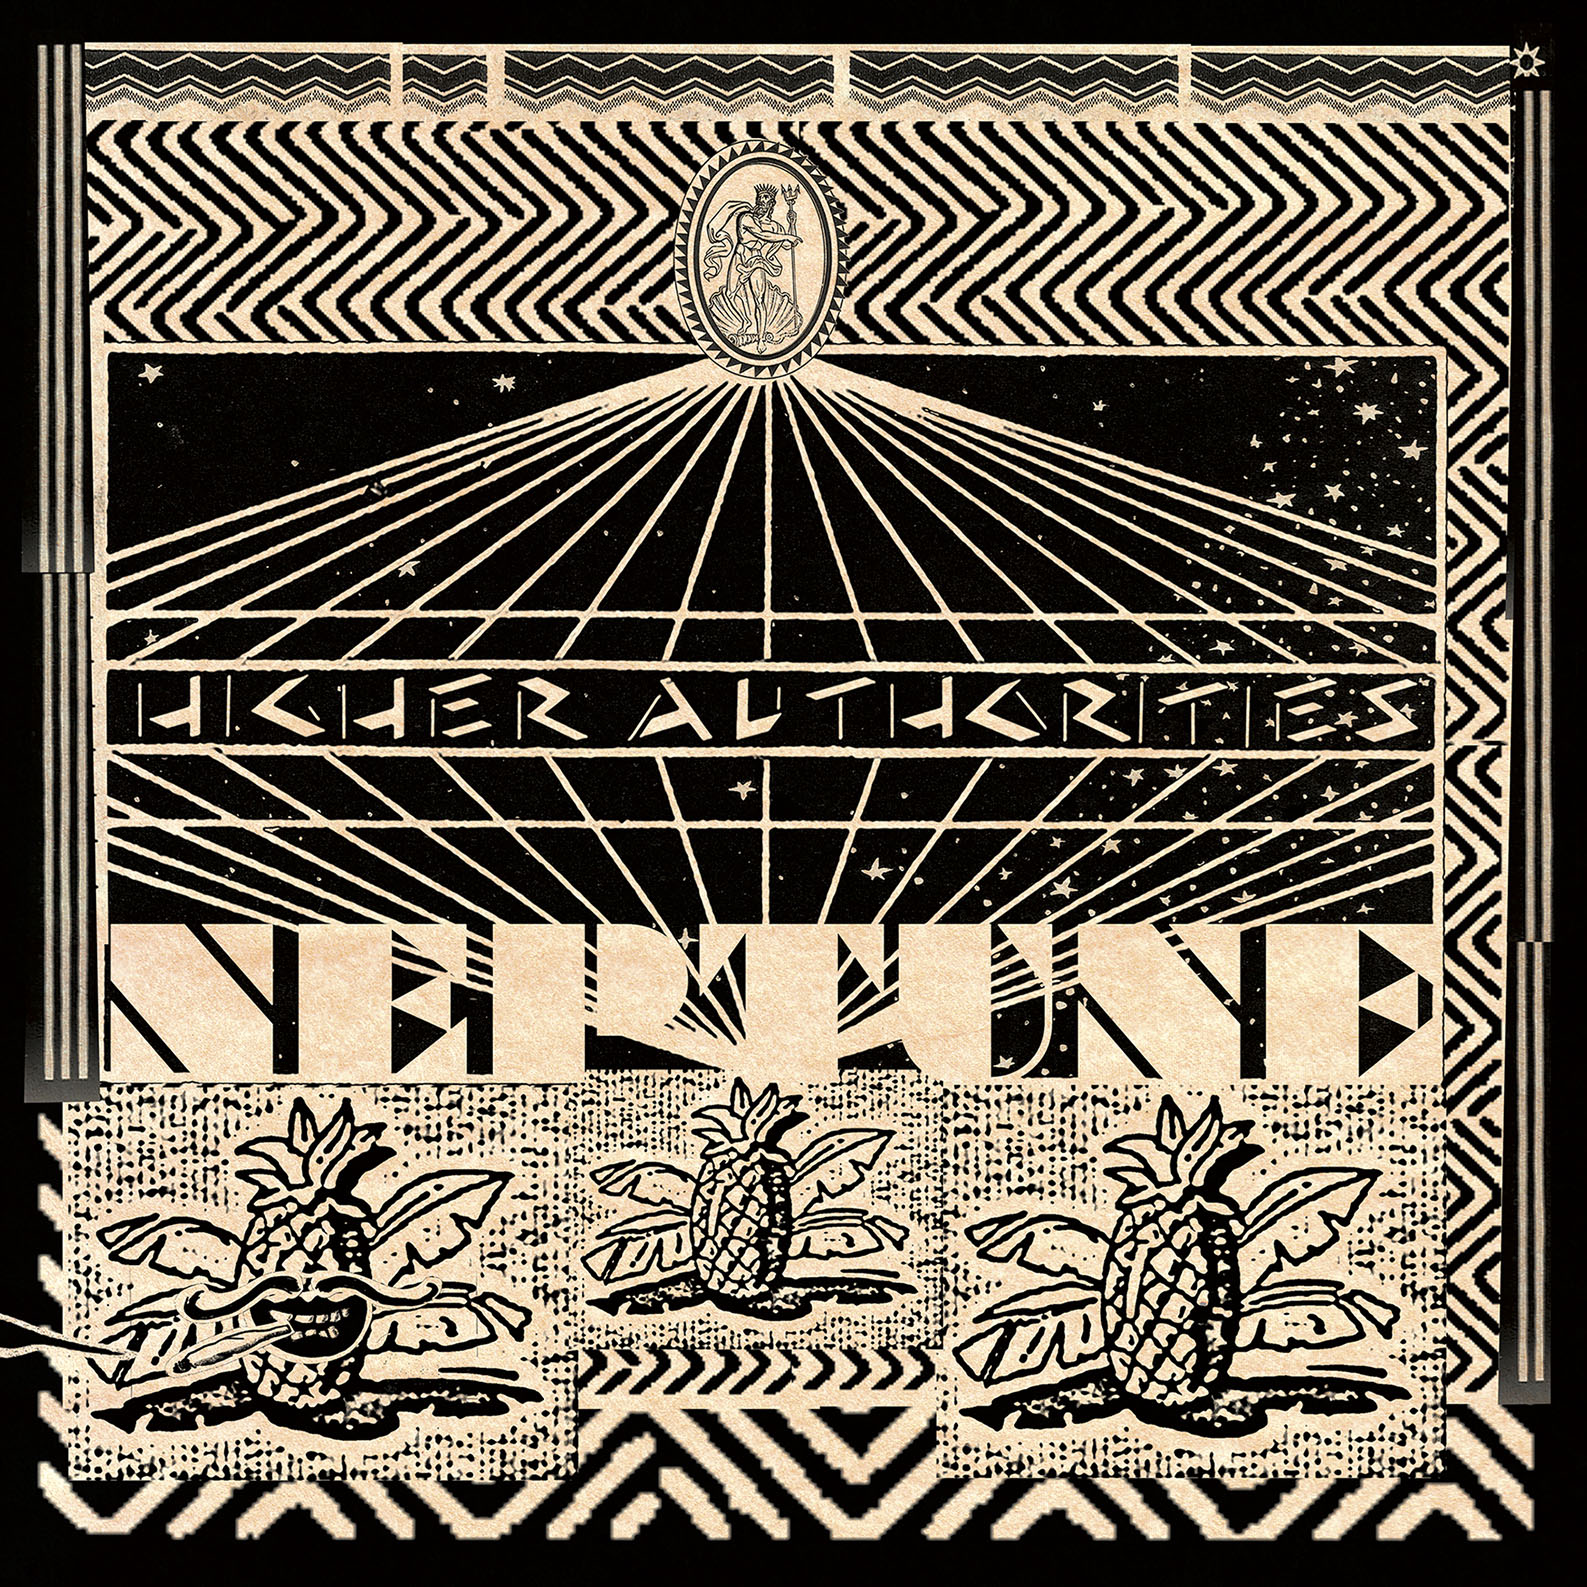 Higher Authorities - Neptune - CD